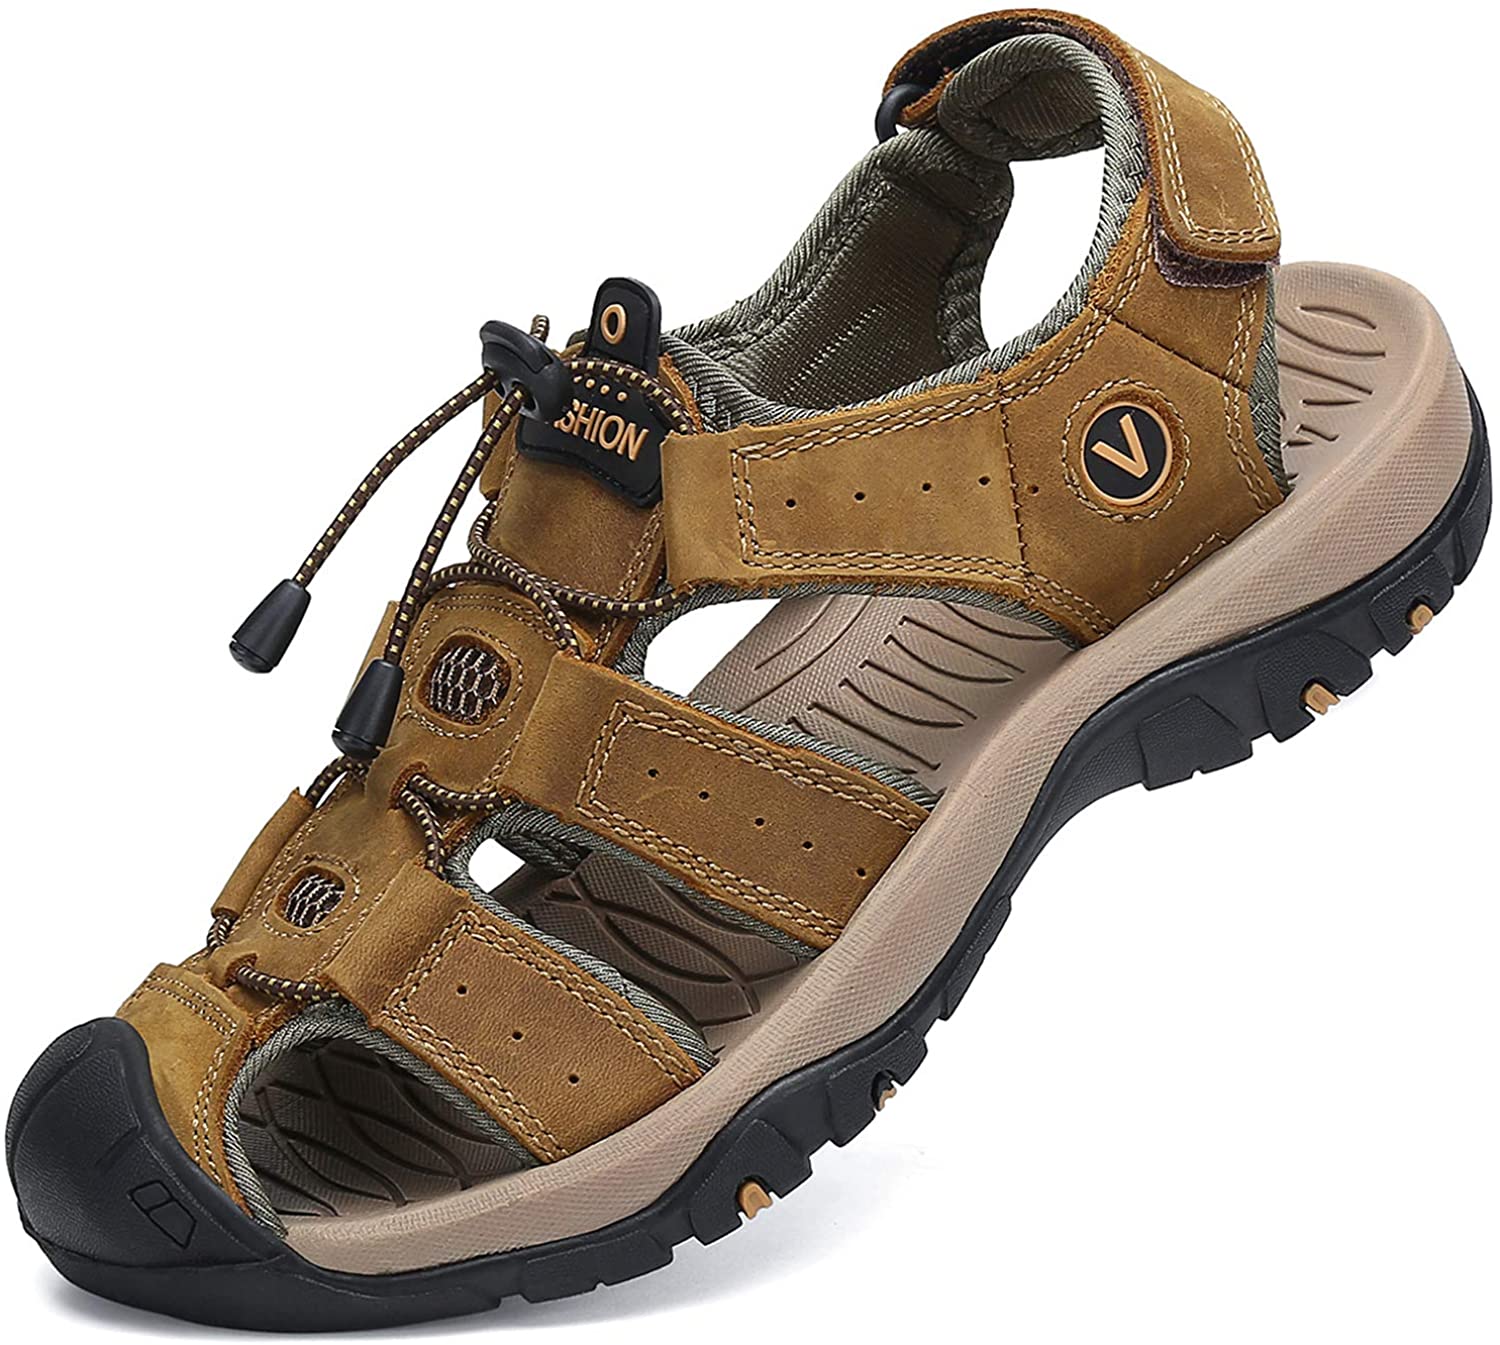 FLARUT Men's Sport Sandals Outdoor Hiking Sandals Closed Toe Leather  Athletic Li | eBay